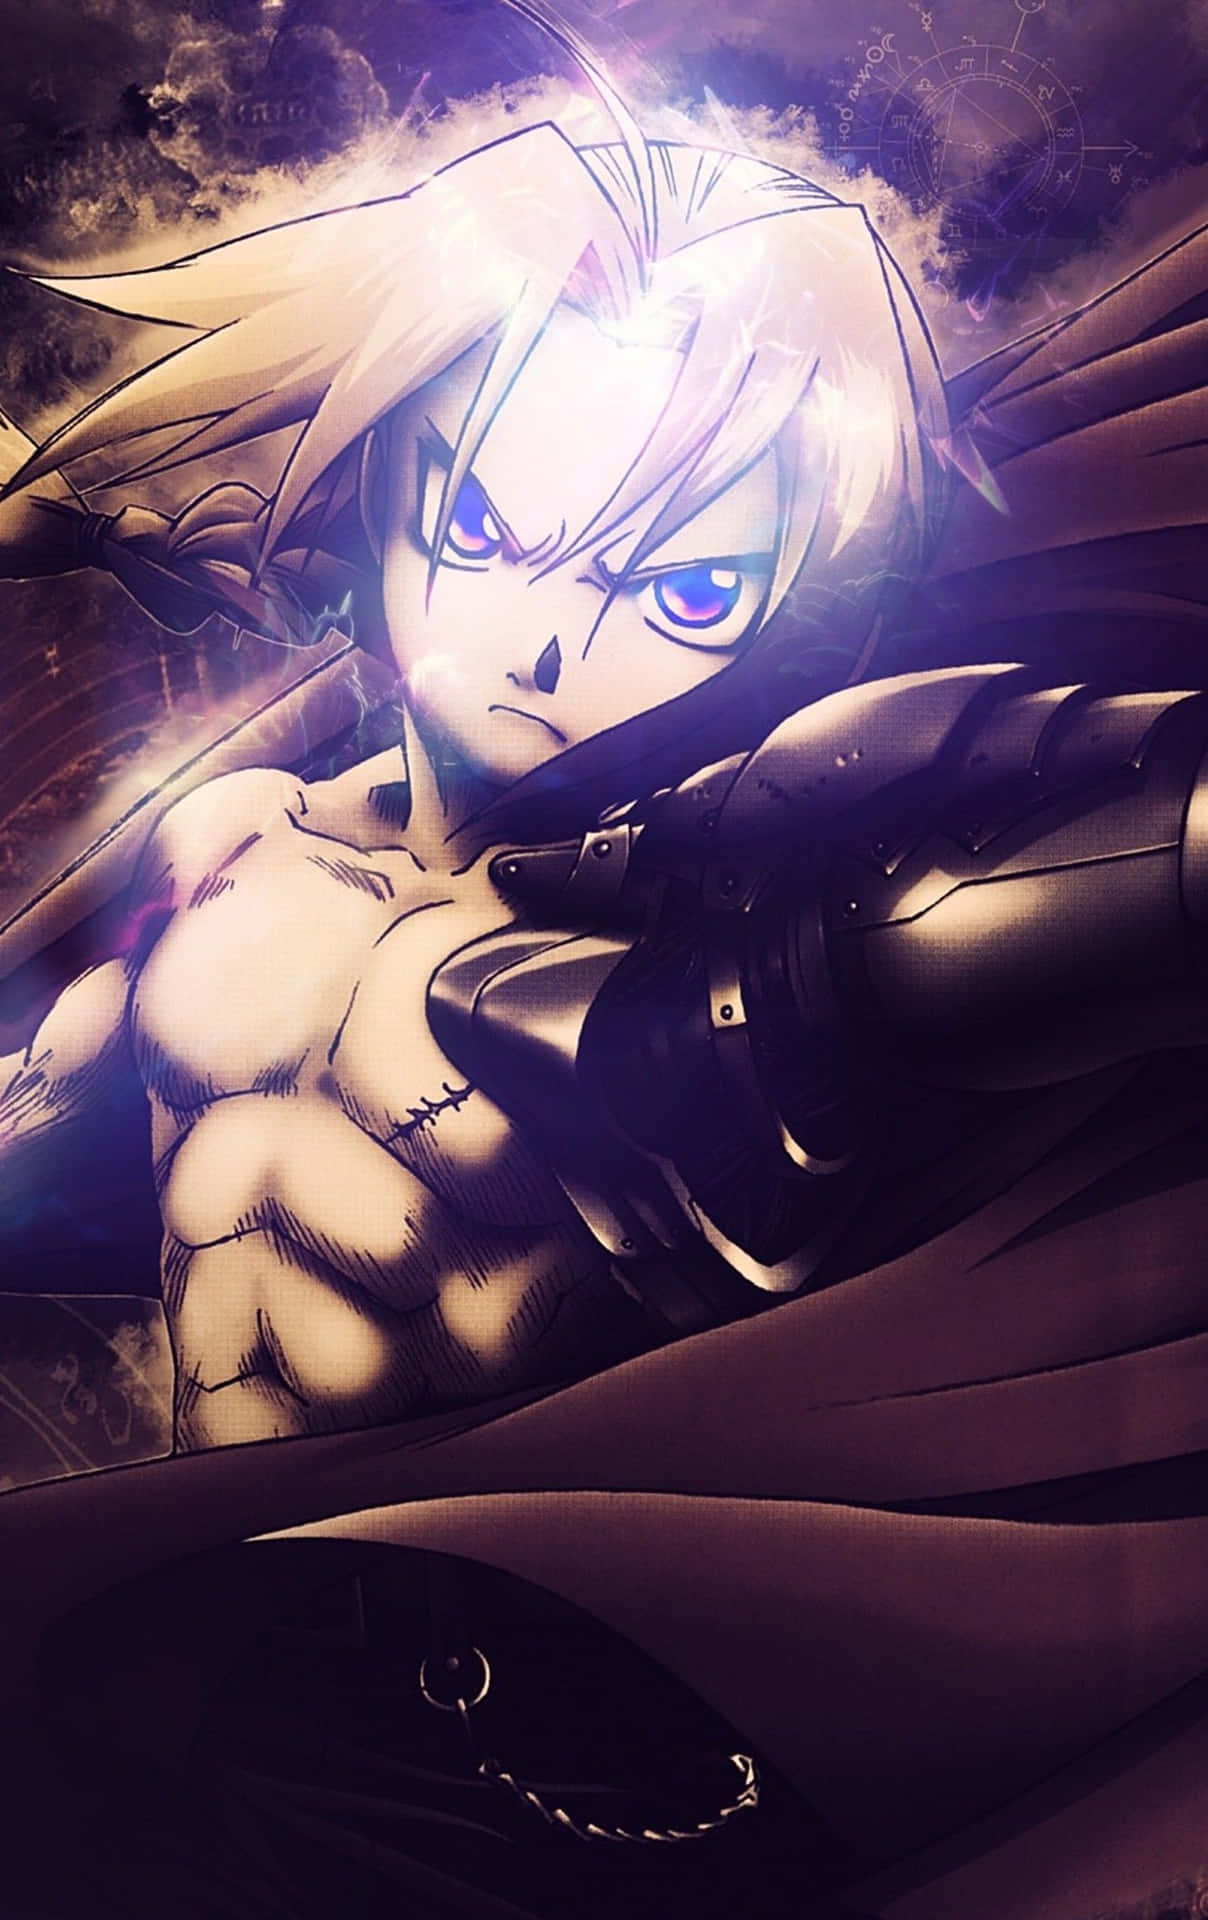 Edward Elric - Fullmetal Alchemist's Protagonist Background